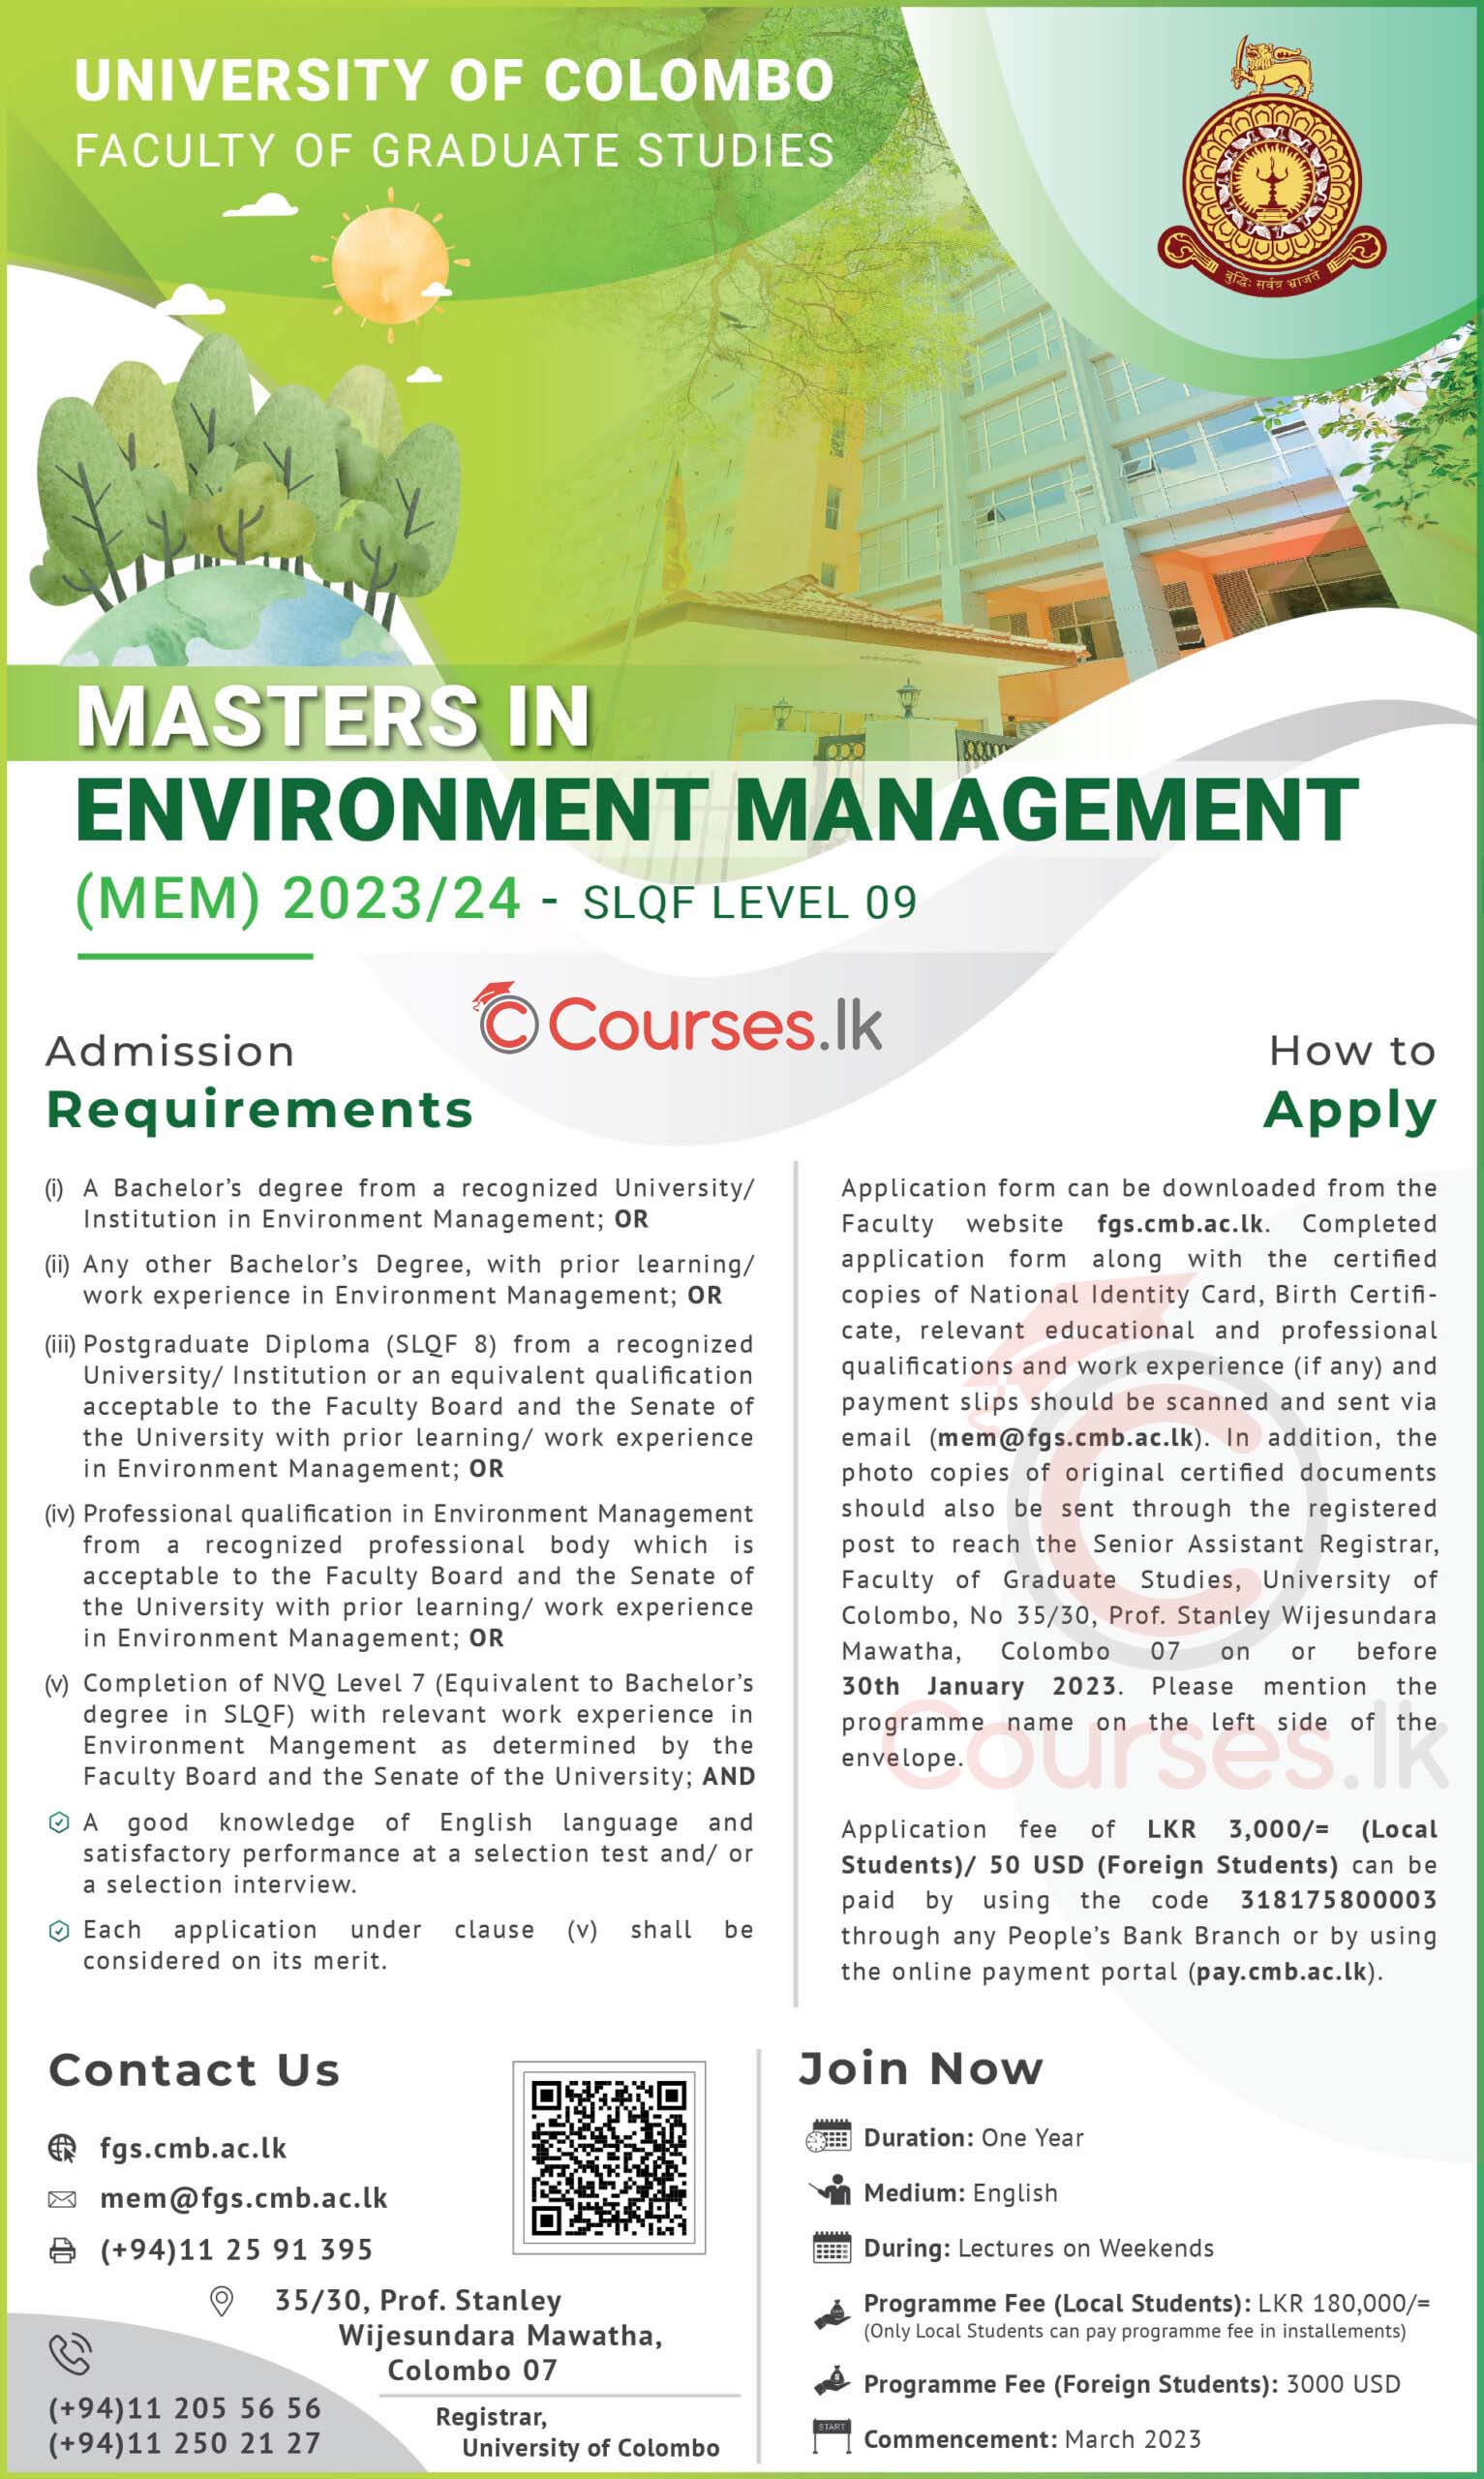 Masters in Environment Management (MEM) 2023/24 - University of Colombo